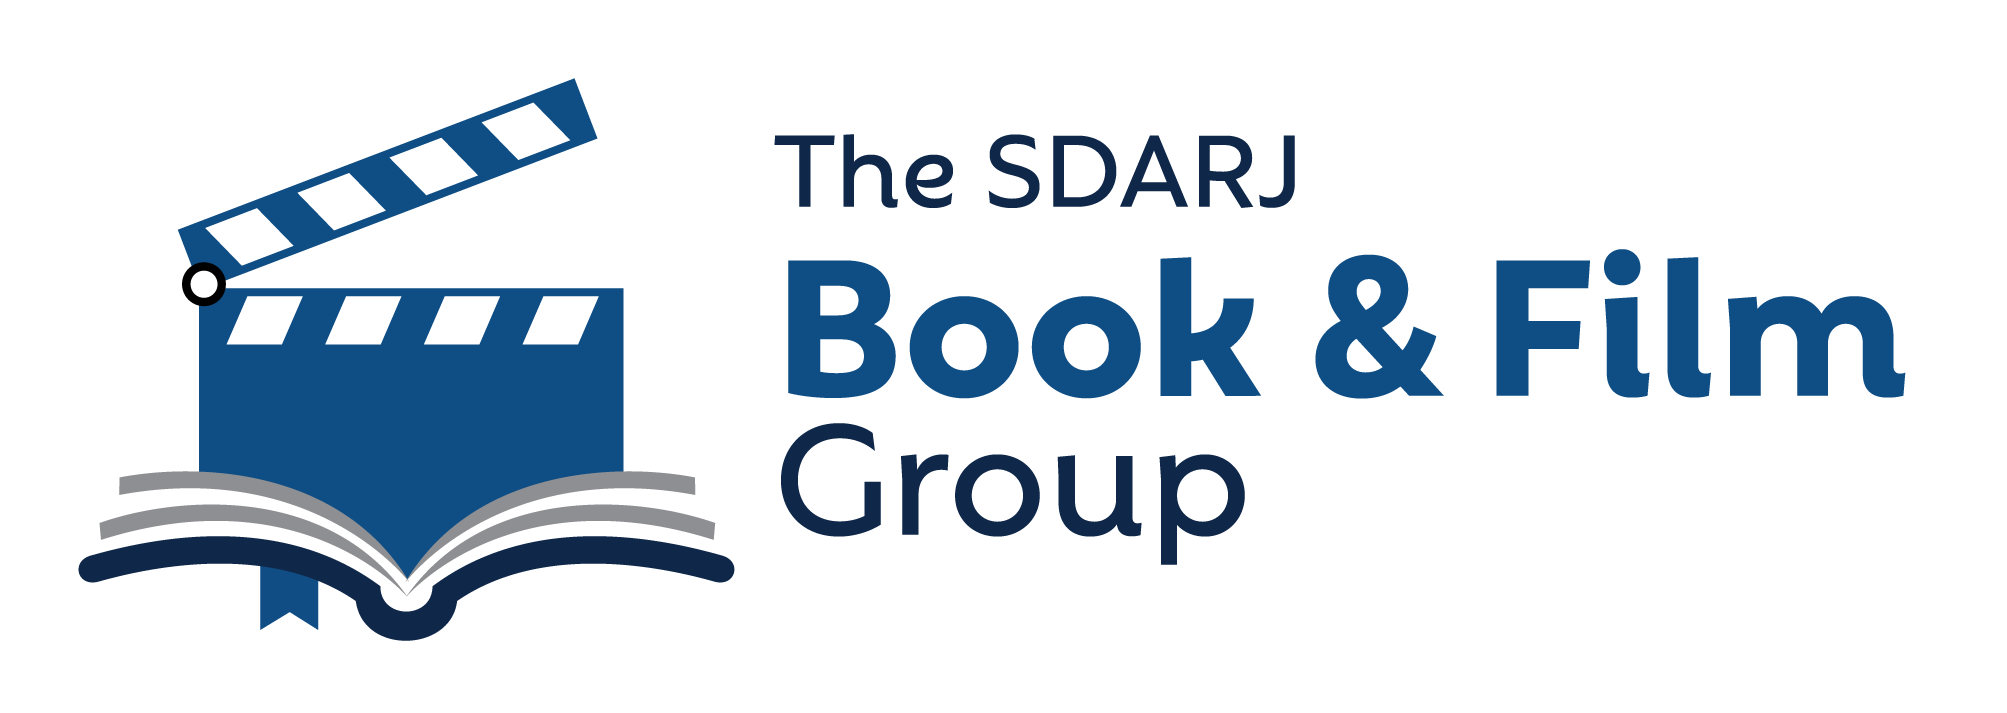 The SDARJ Book & Film Group